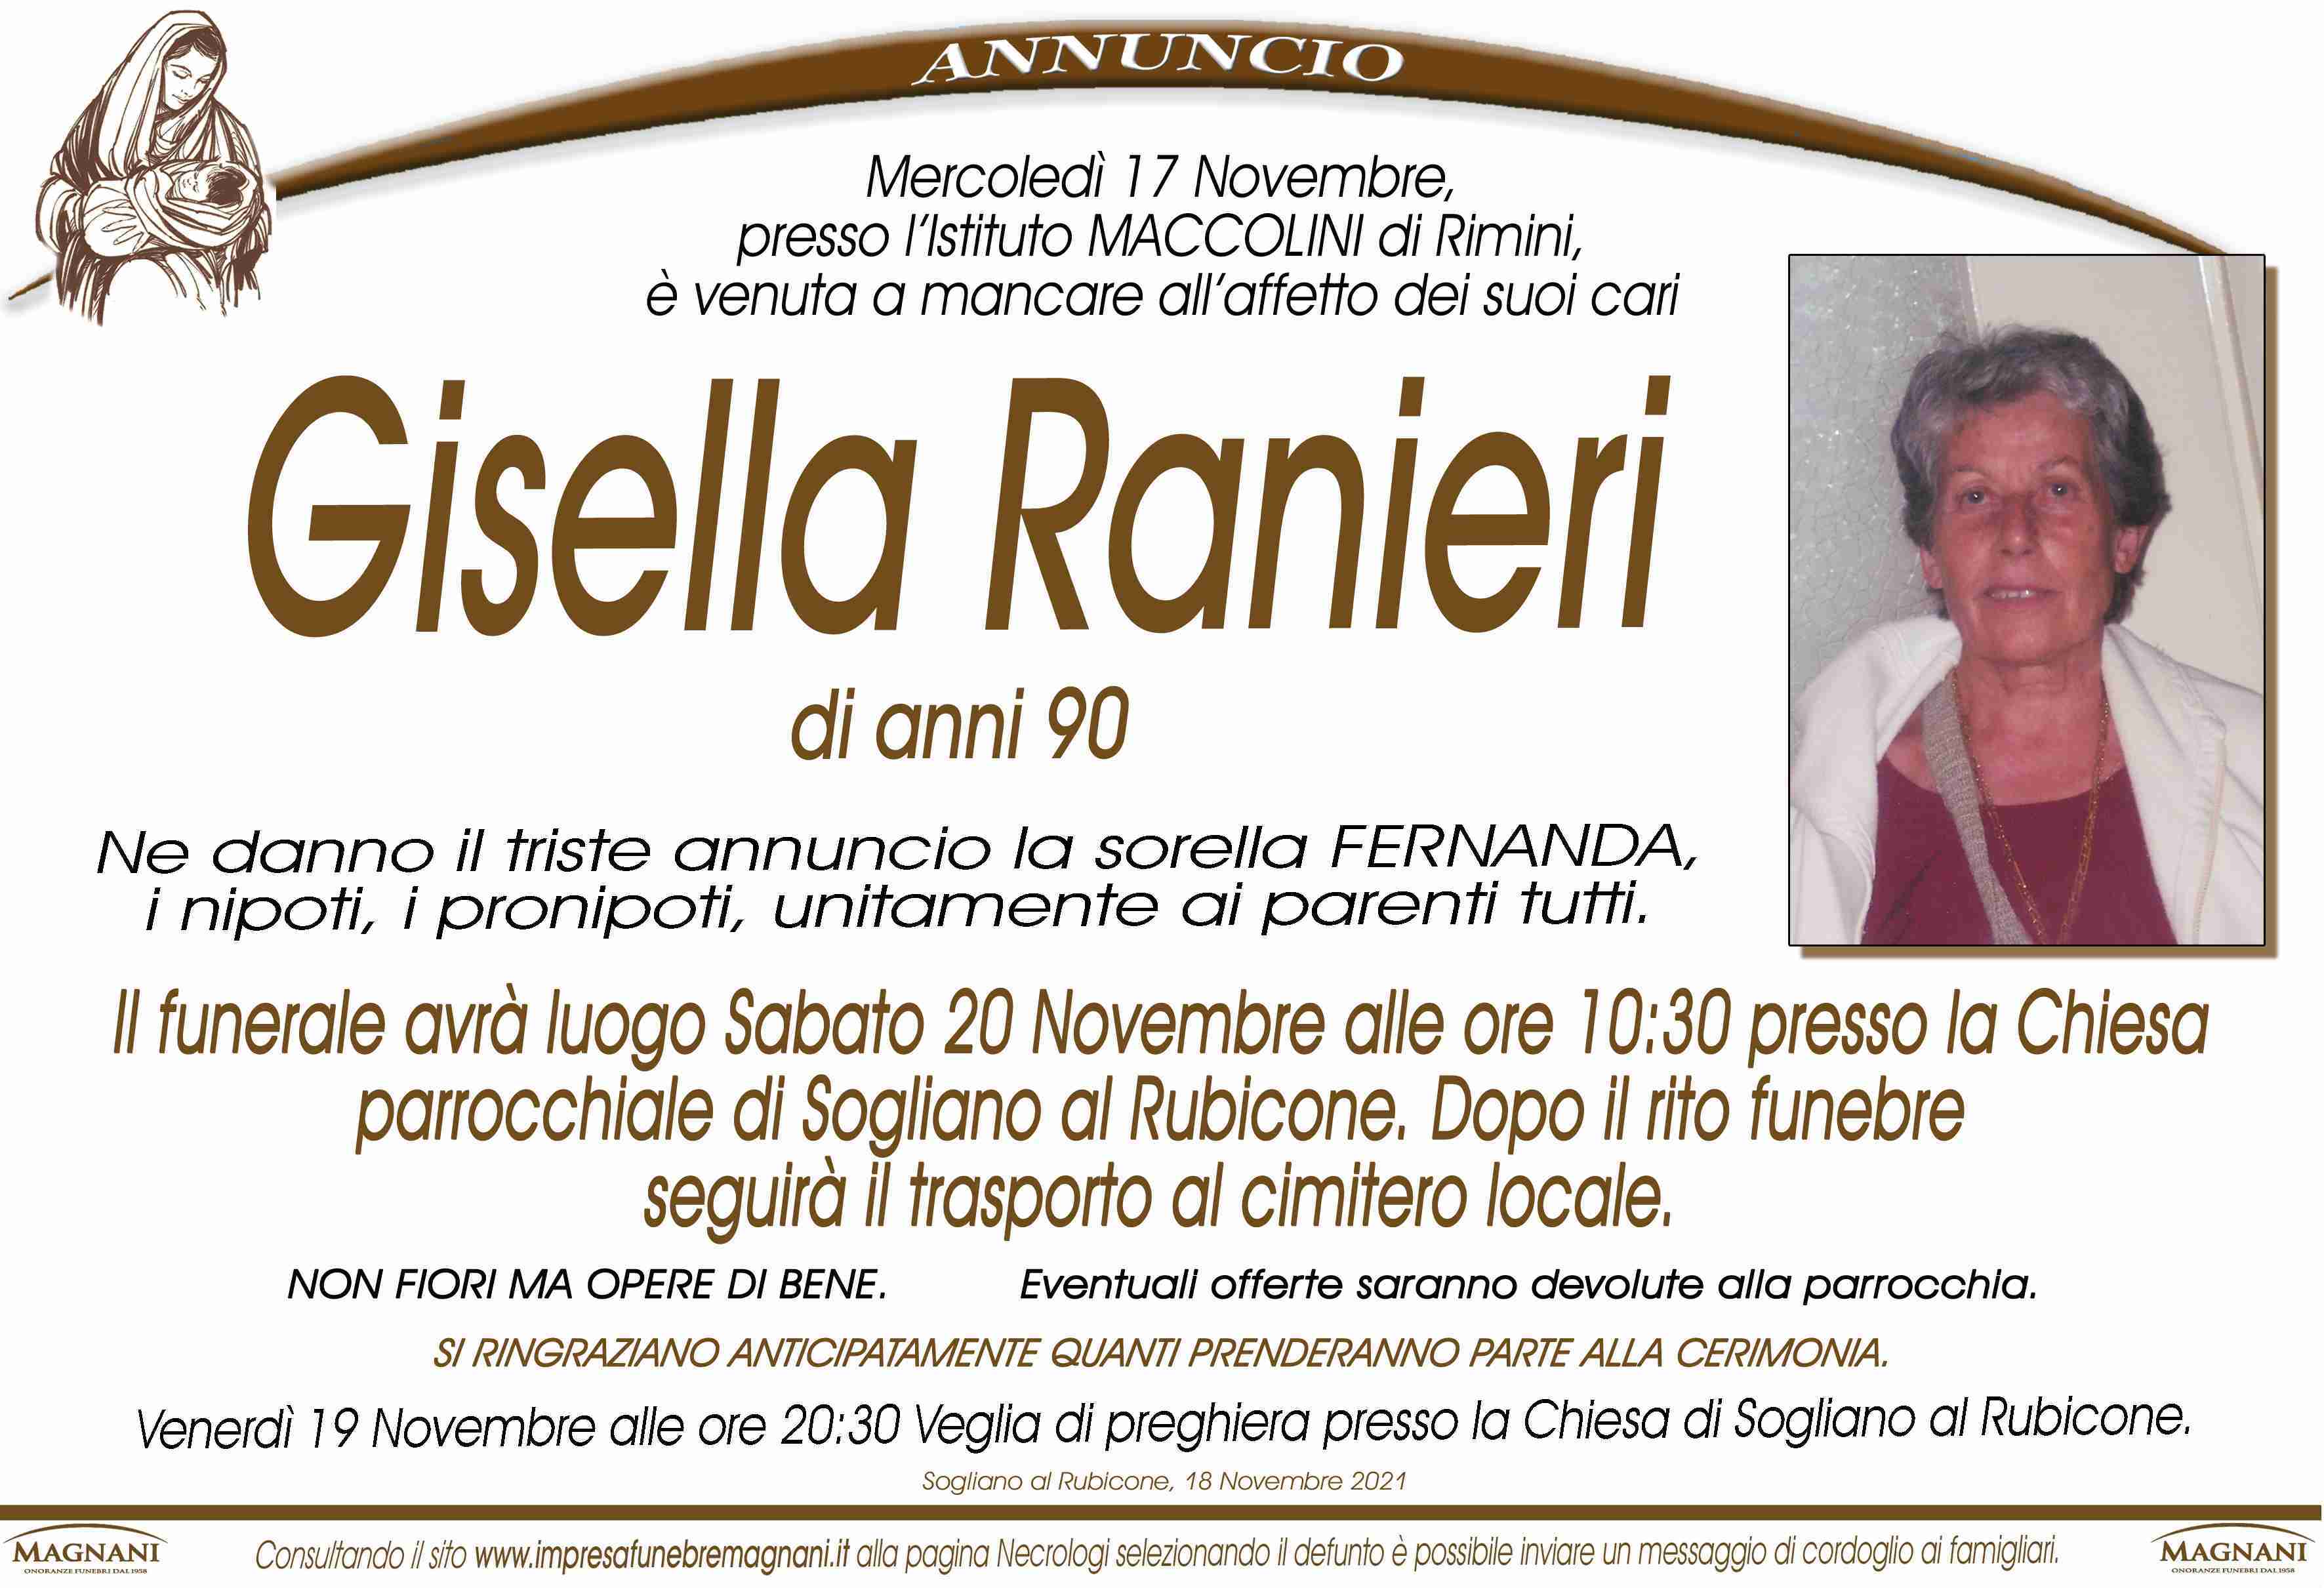 Gisella Ranieri